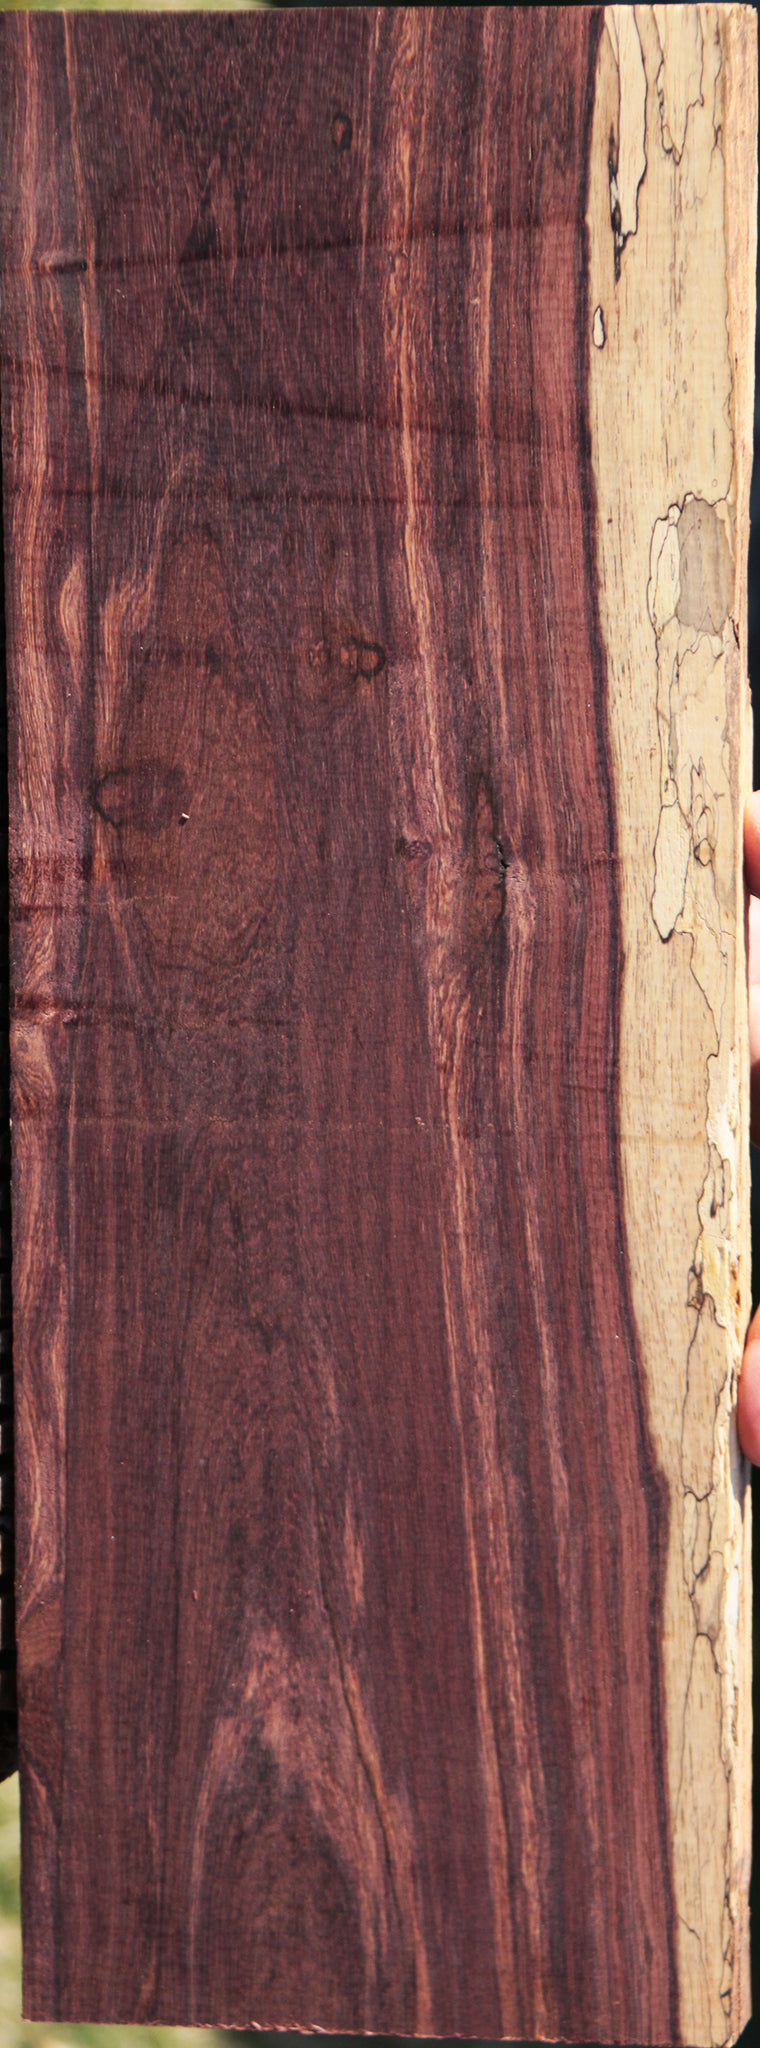 Spalted Madagascar Rosewood Lumber